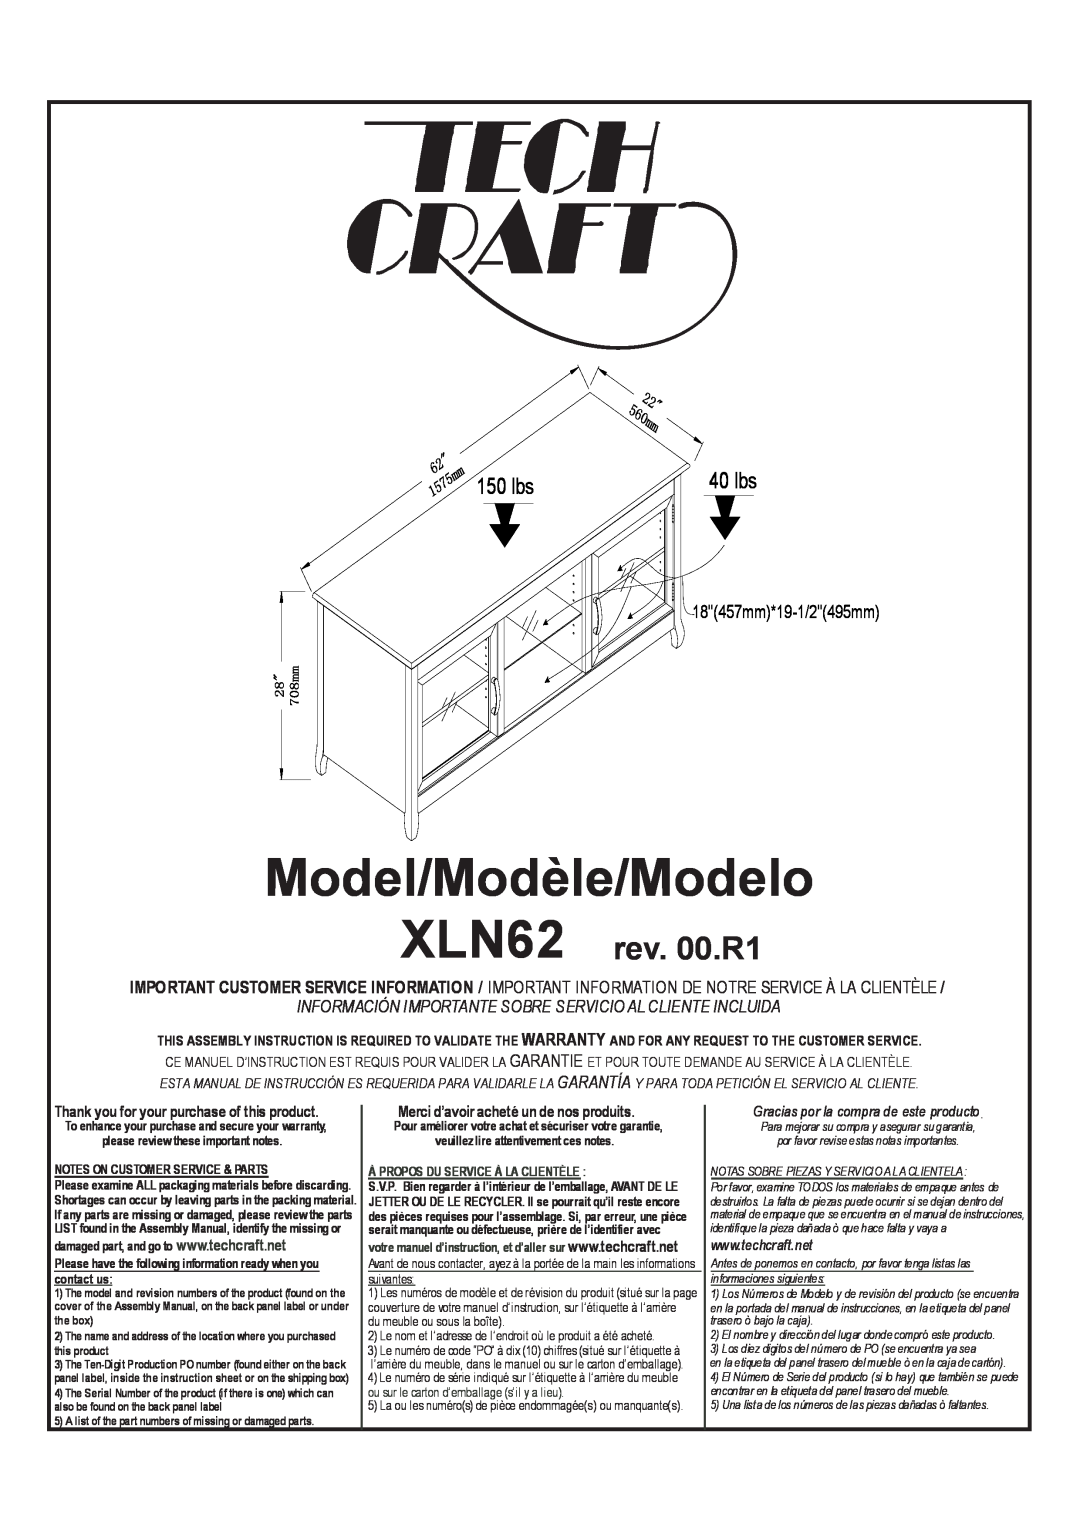 Tech Craft manual Model/Modèle/Modelo, XLN62 rev. 00.R1, 150 lbs, 40 lbs, 18457mm*19-1/2495mm, suivantes 